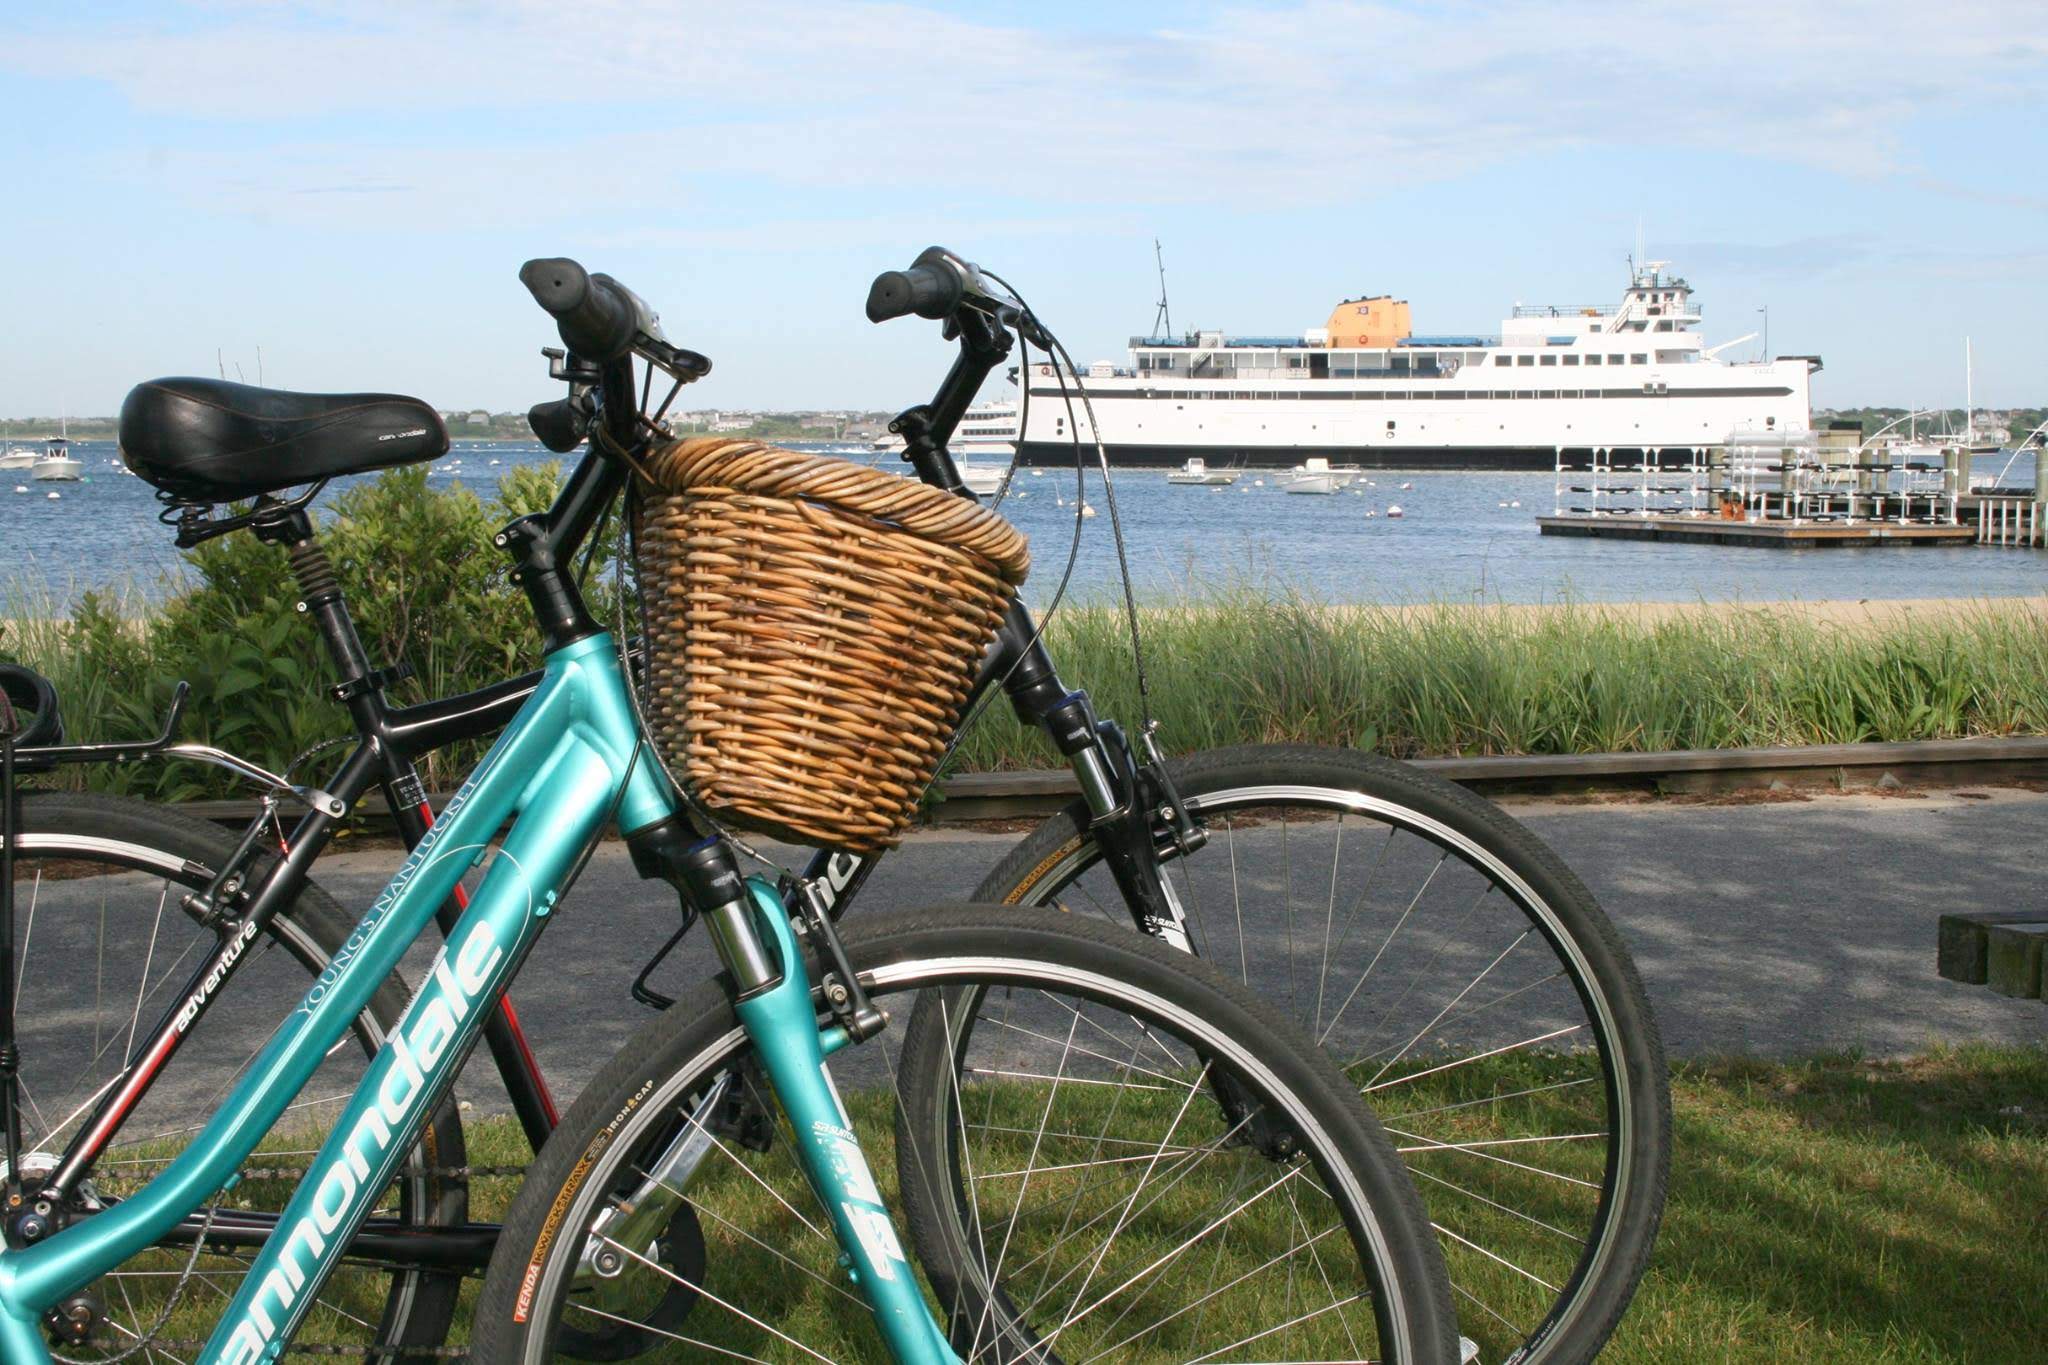 nantucket bike rentals at the harbor